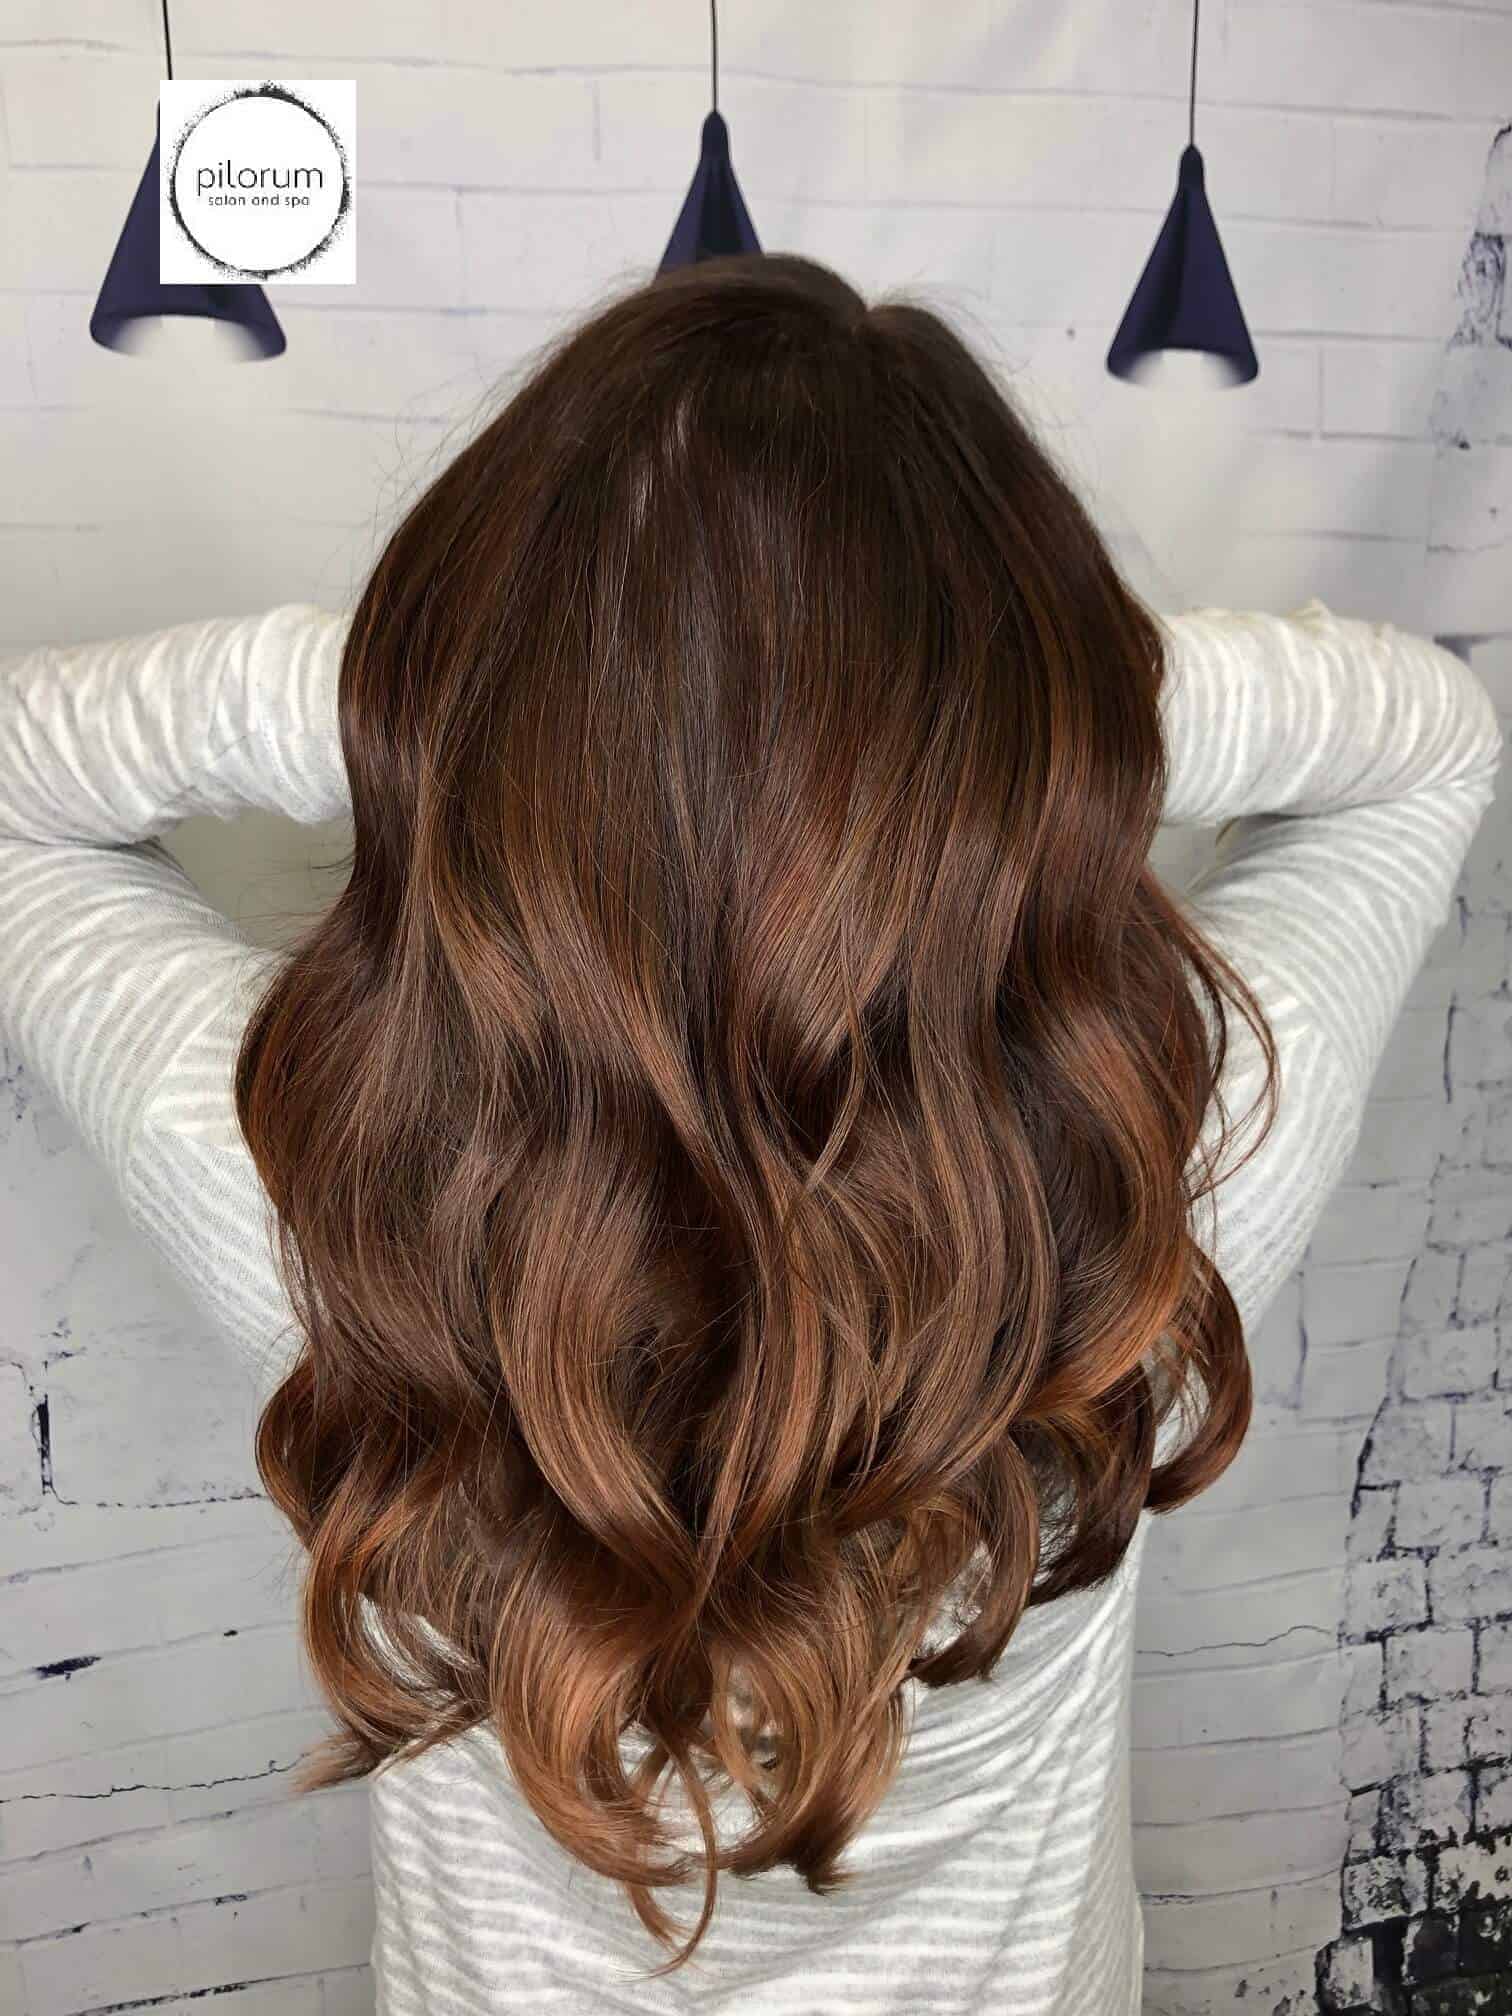 Brown Hair With Blonde Highlights Pilorum Salon Spa